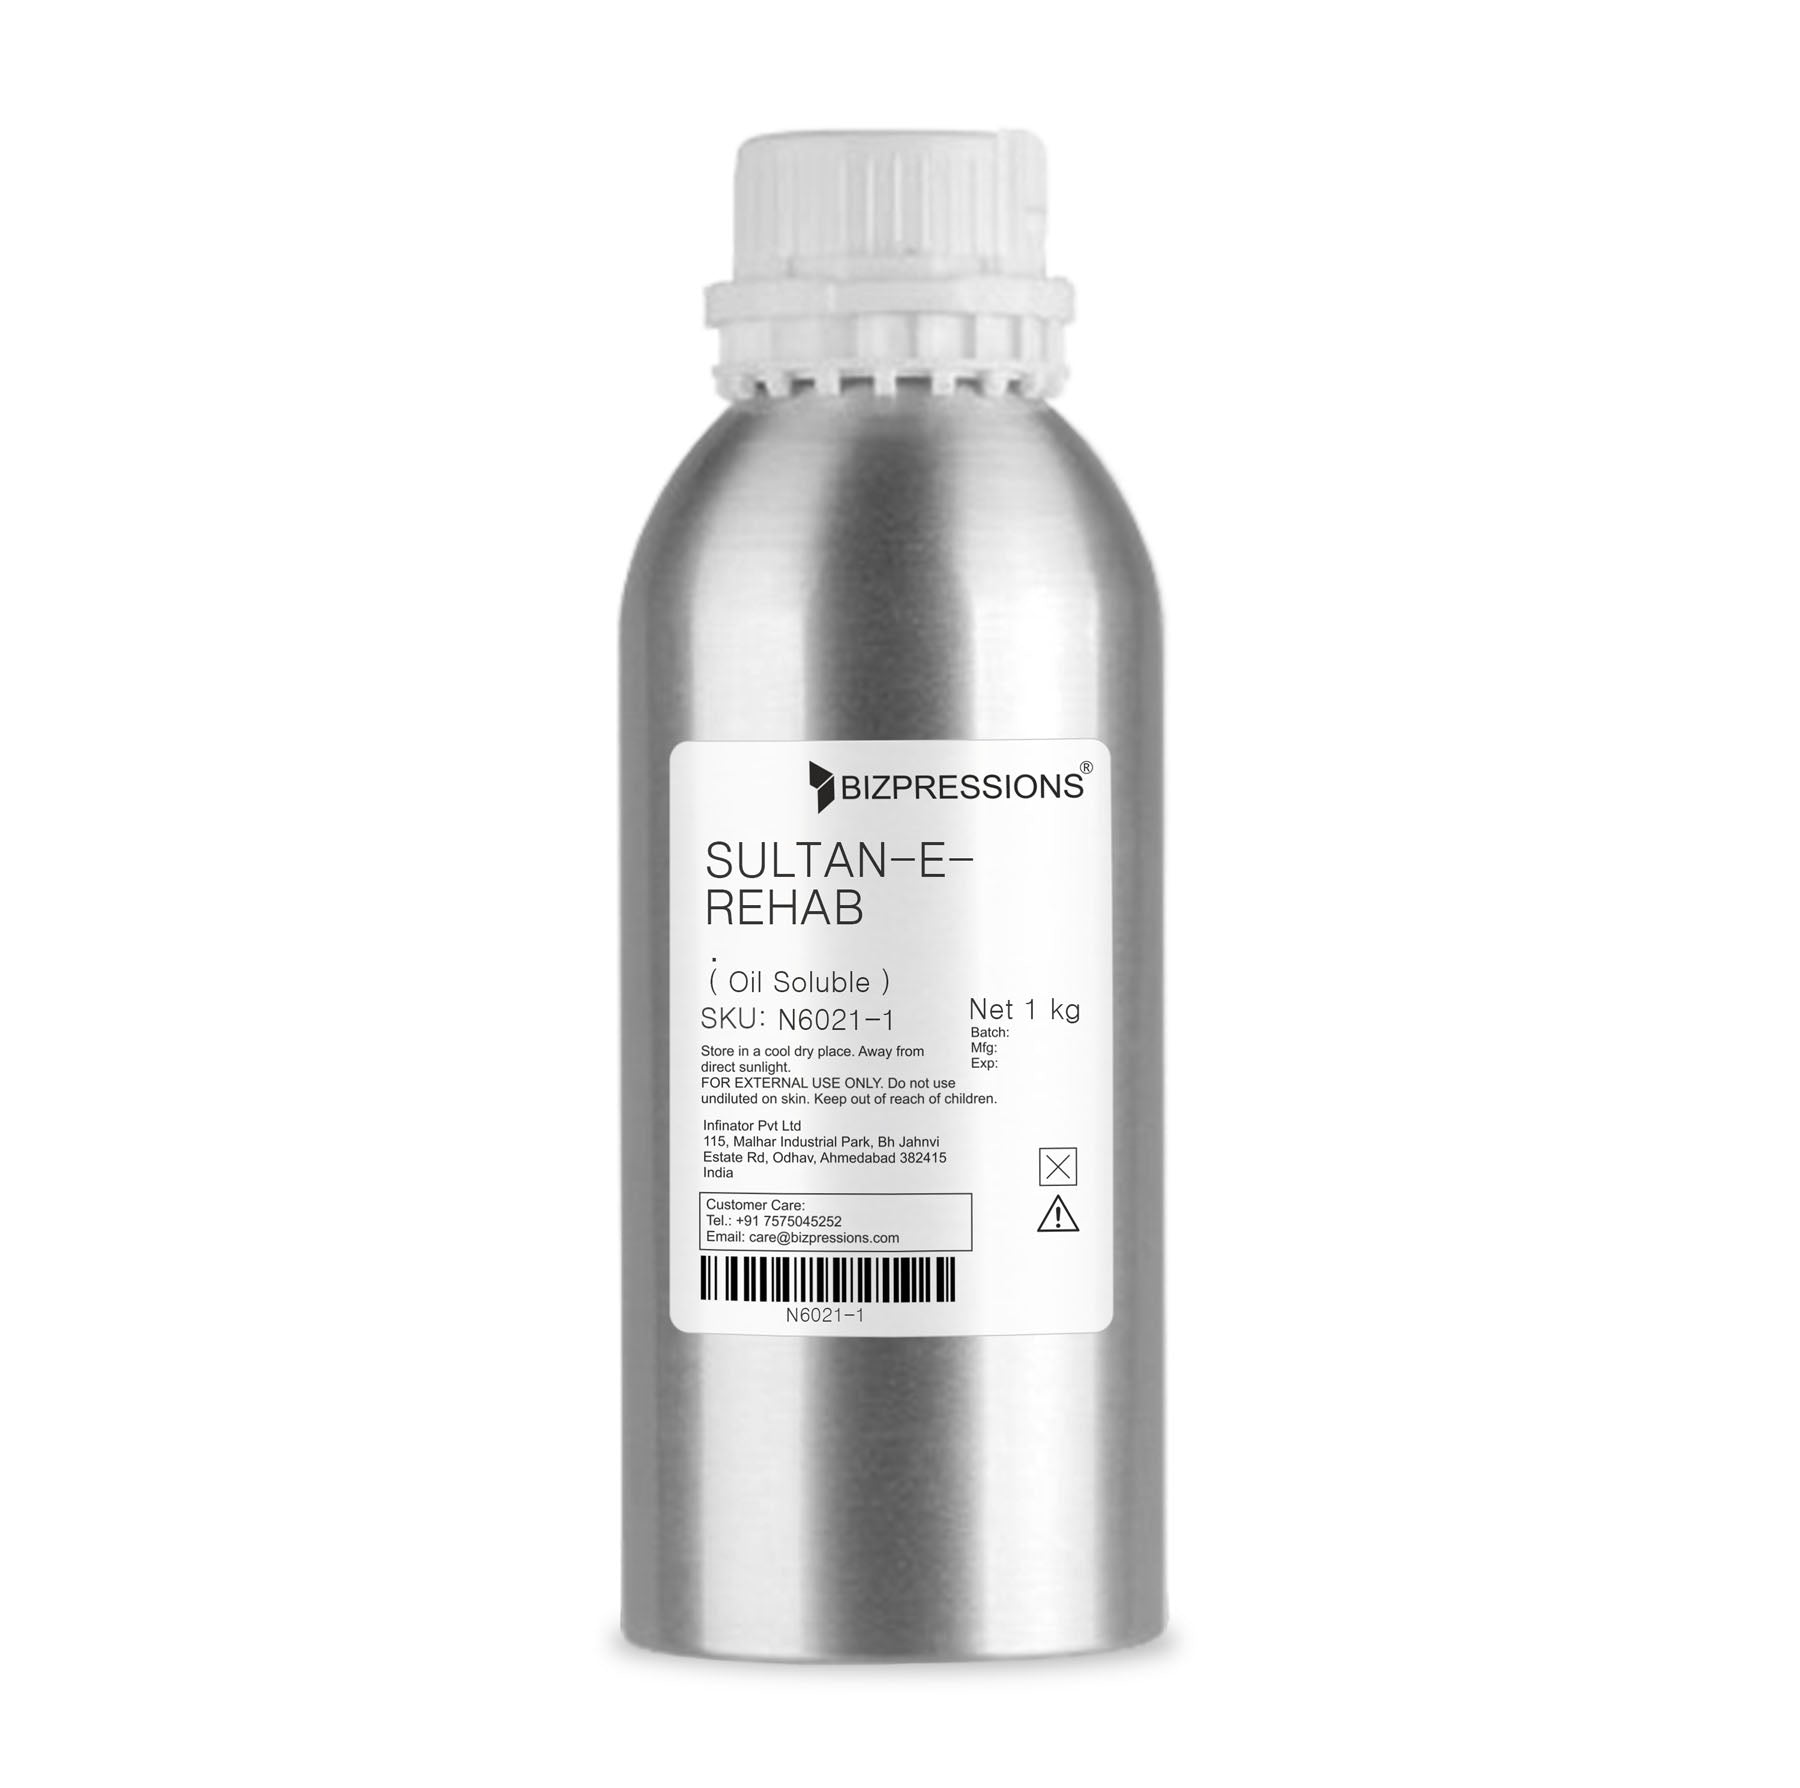 SULTAN-E-REHAB - Fragrance ( Oil Soluble ) - 1 kg